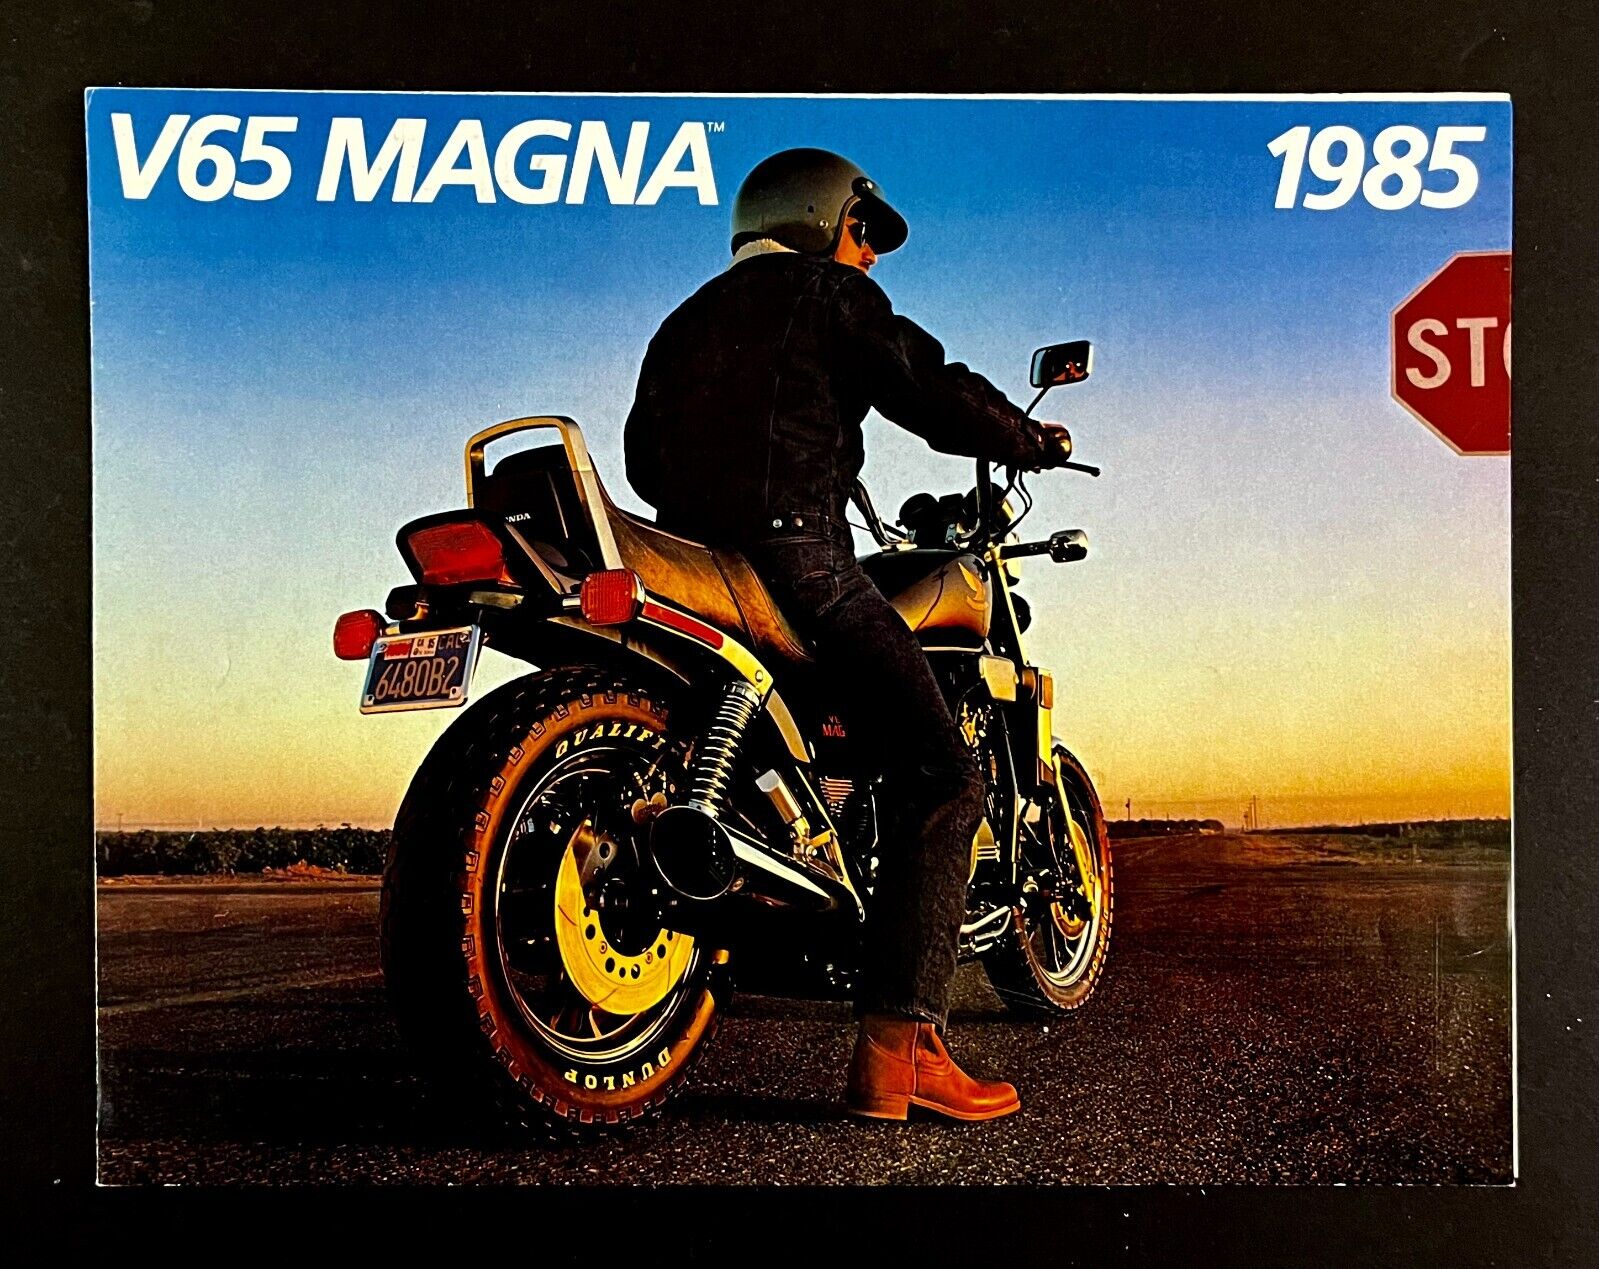 1985 V65 Magna Honda Motorcycle Vintage Ad Brochure Make A Powerful Statement